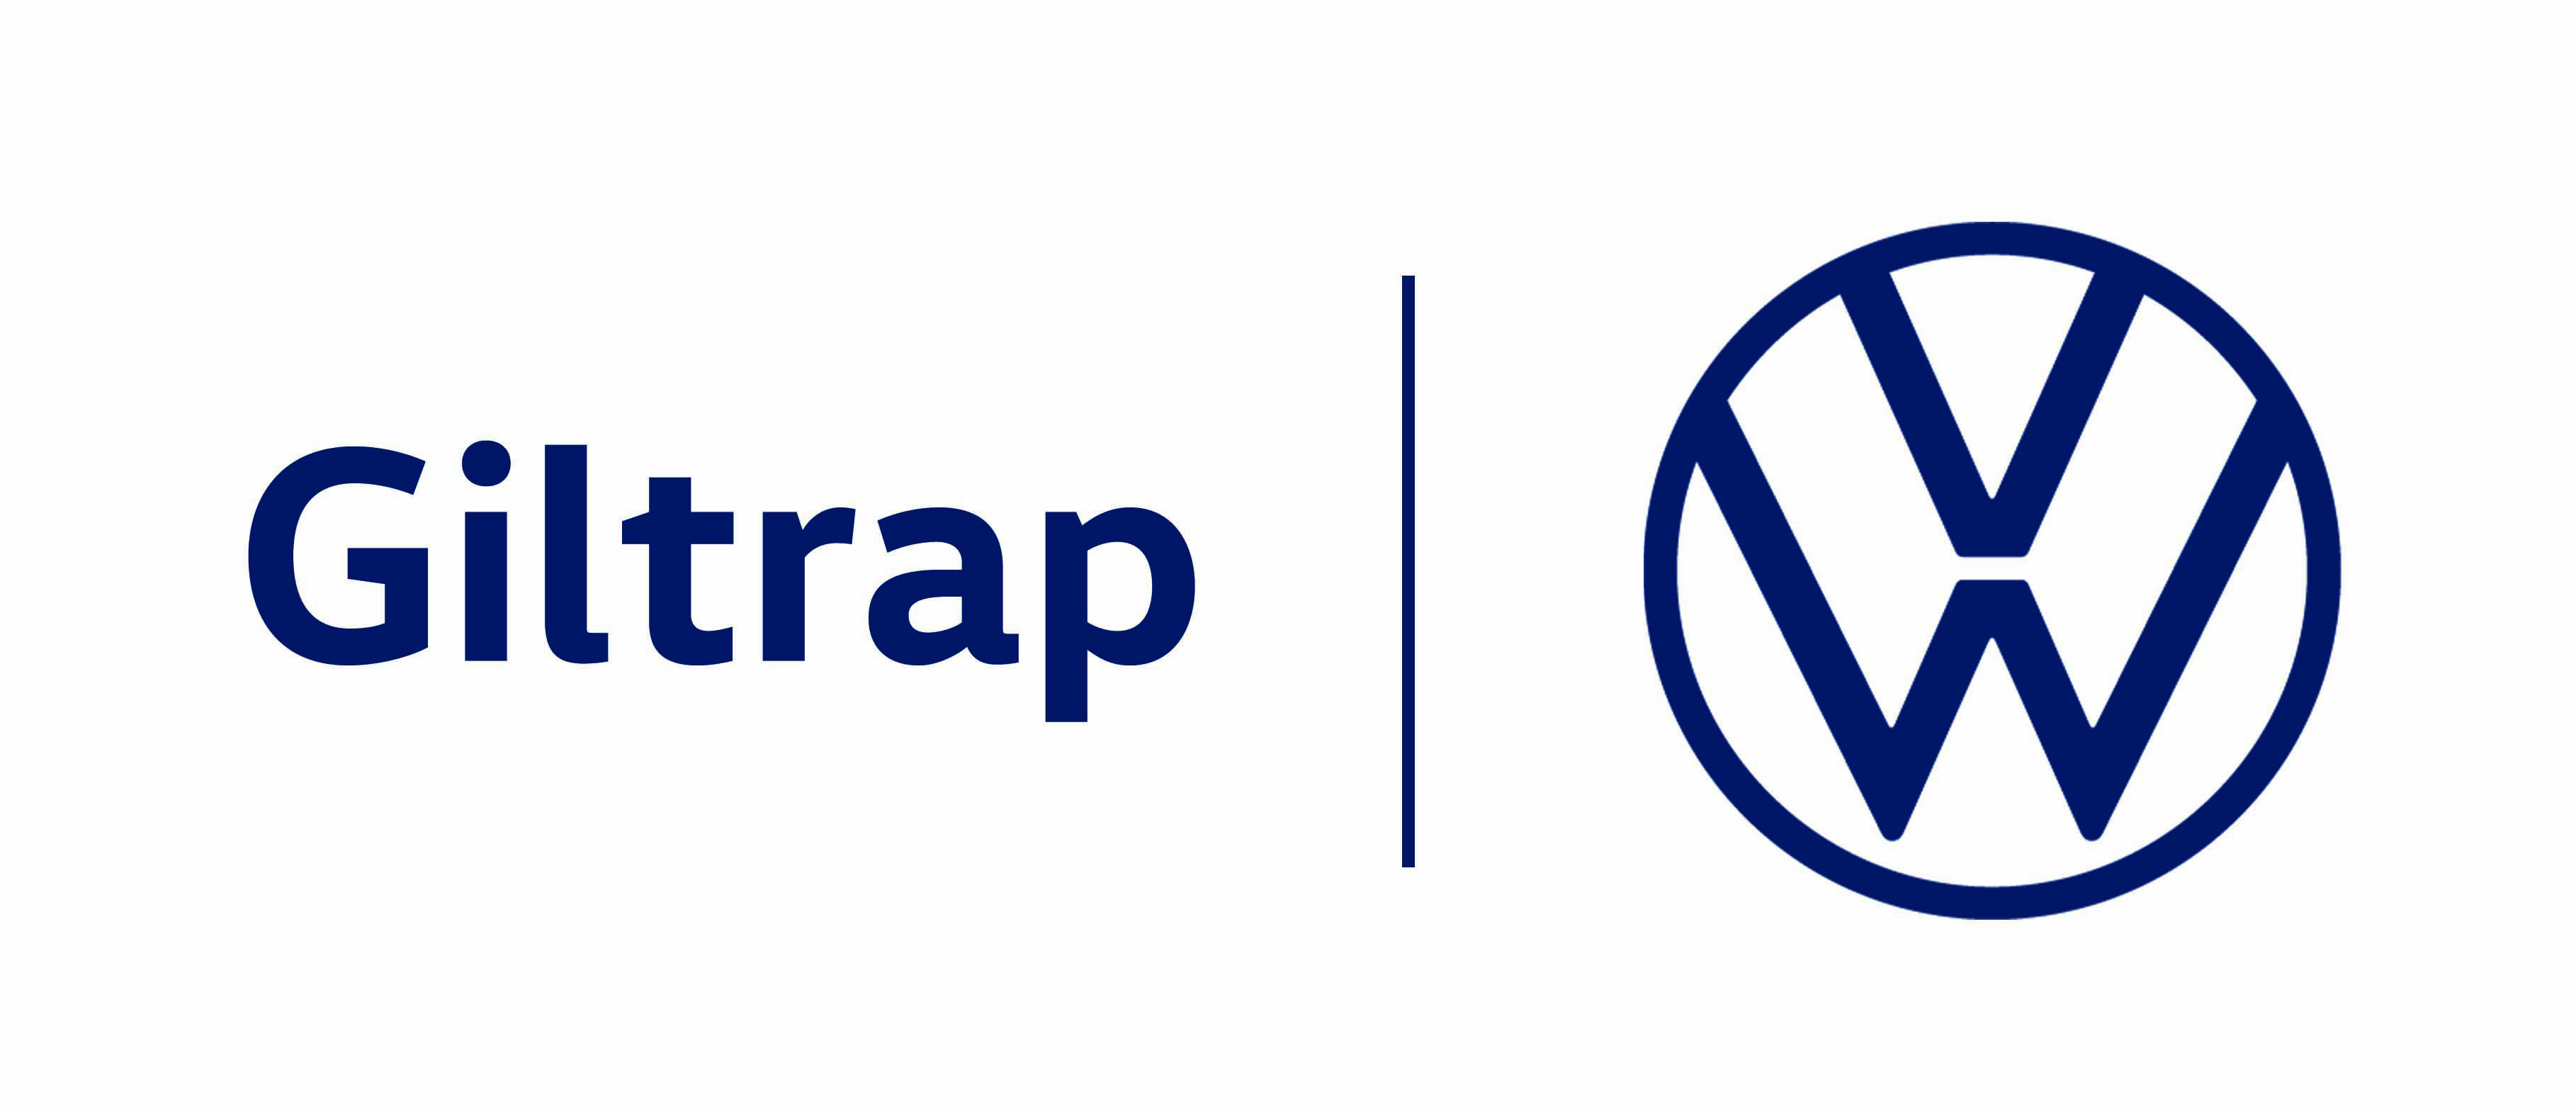 Giltrap logo